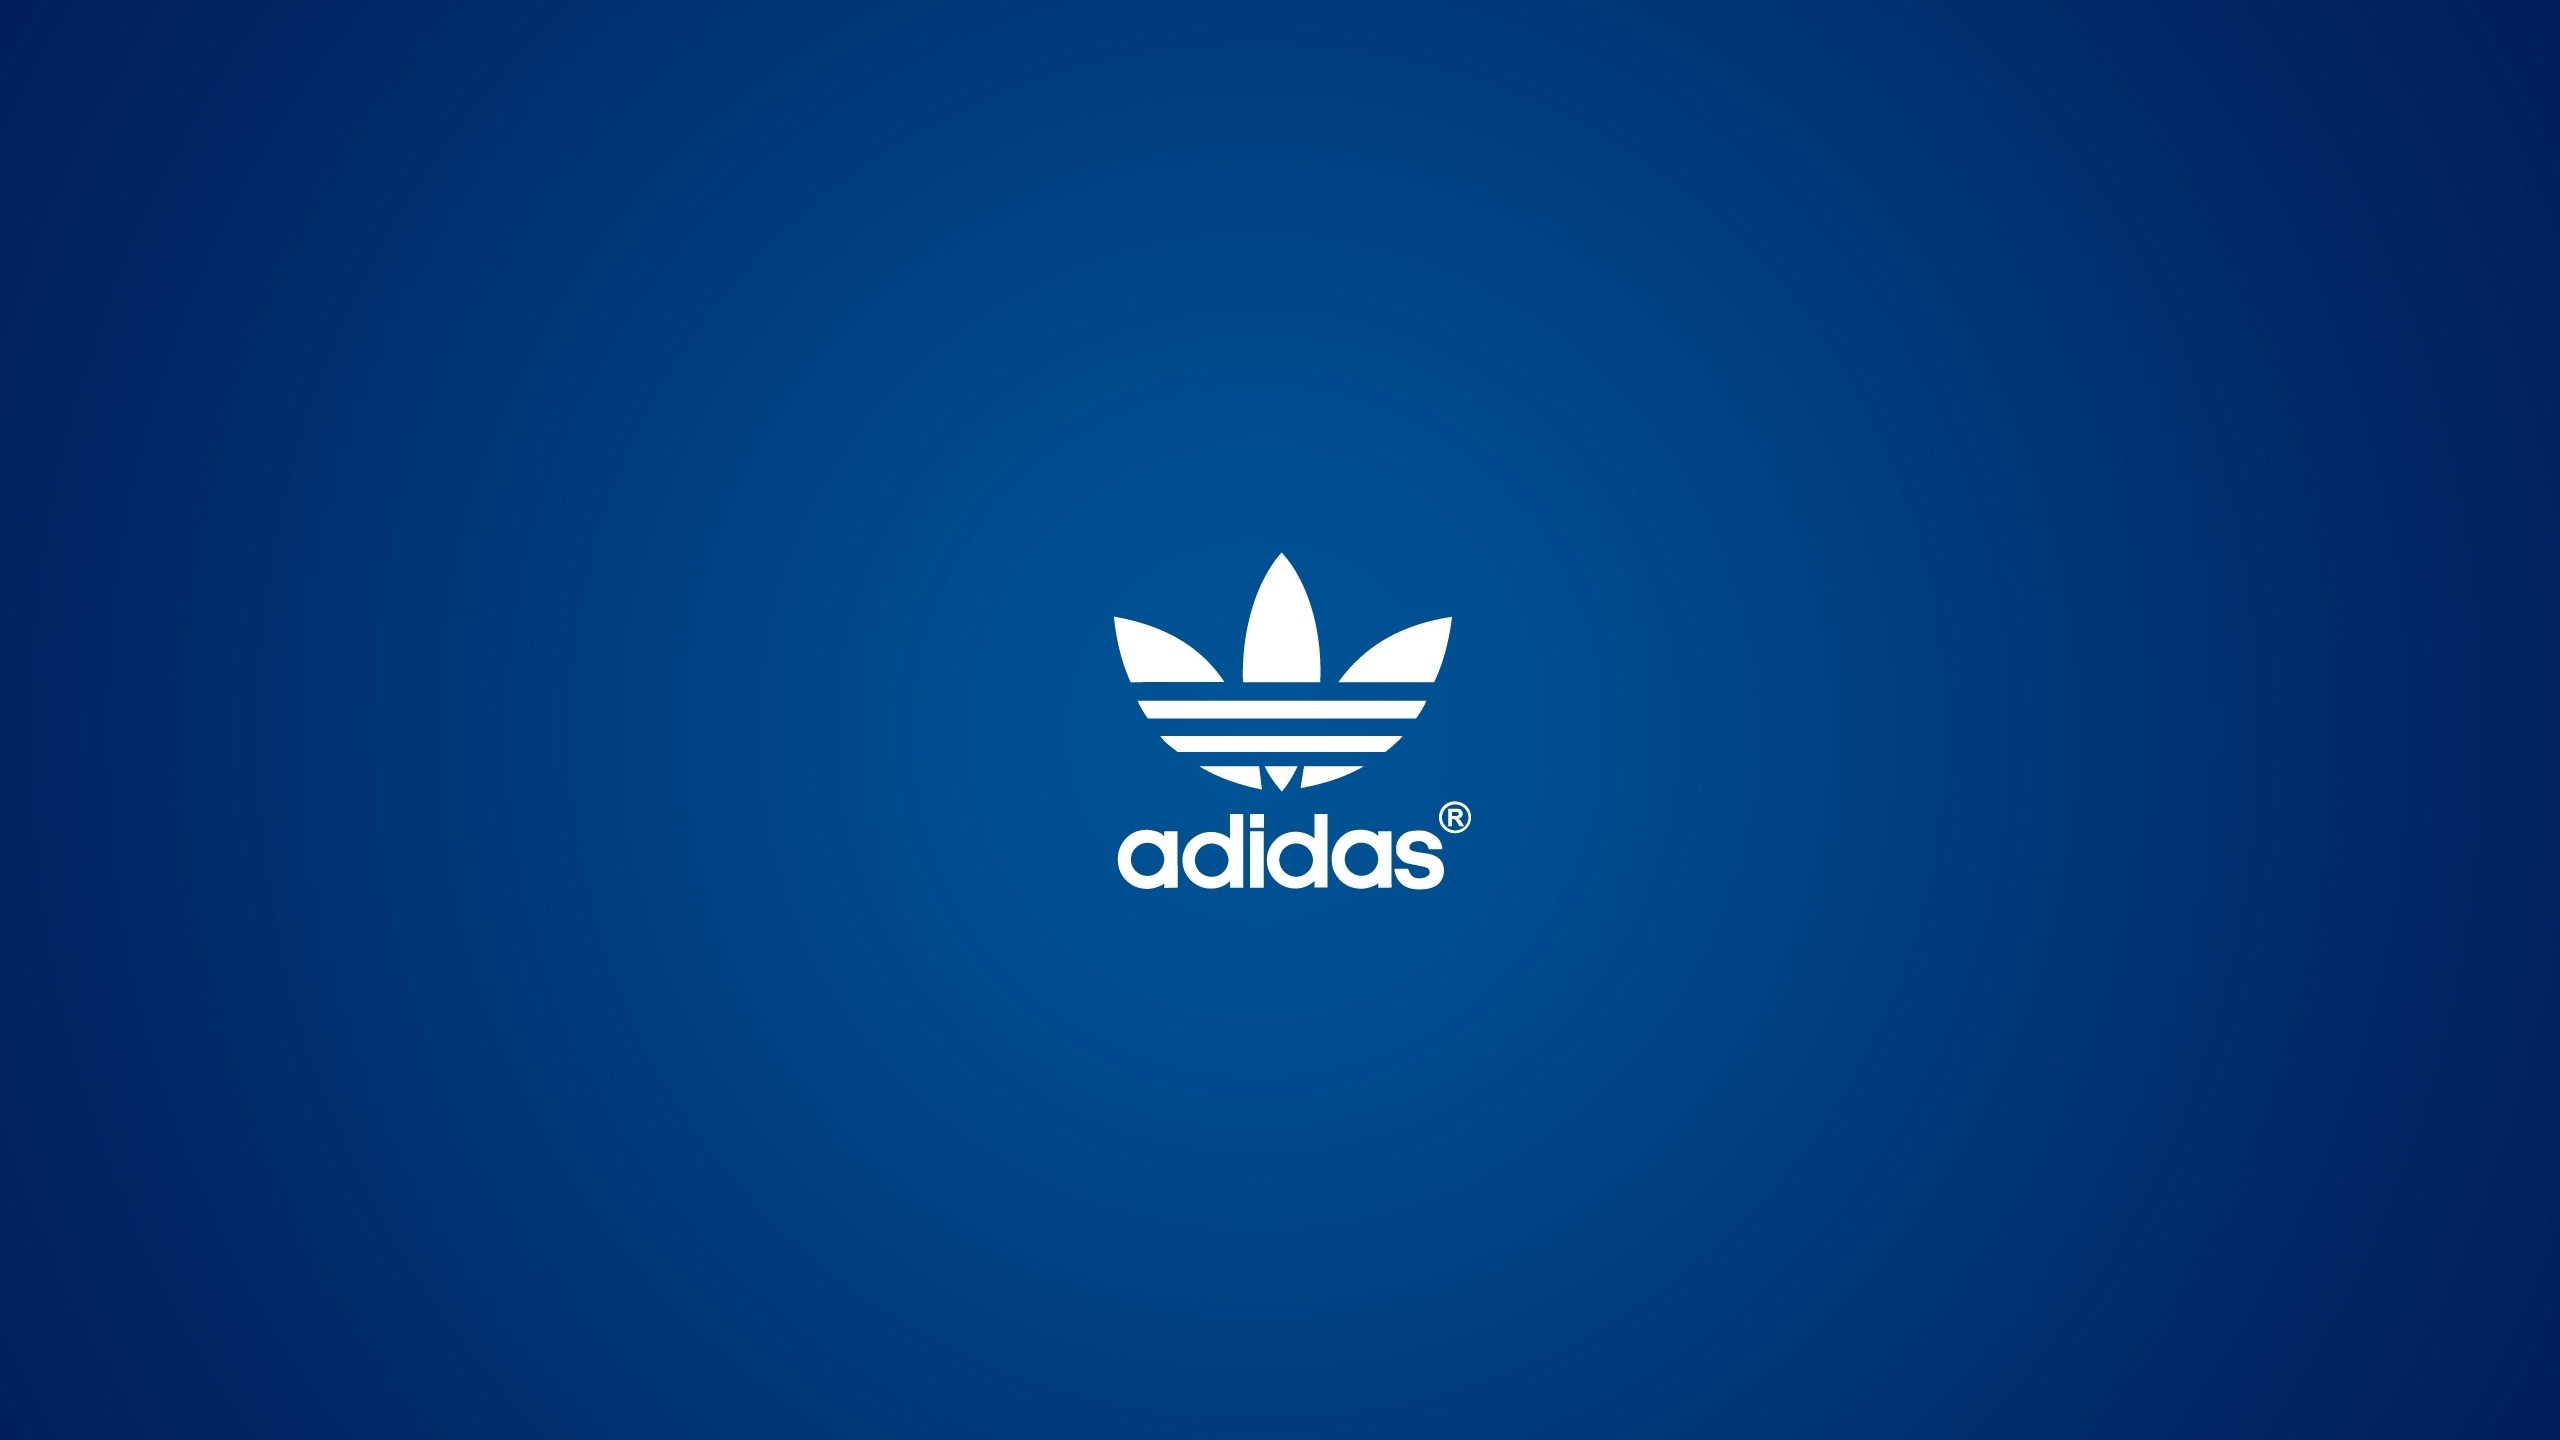 Adidas Logo for 2560x1440 HDTV resolution